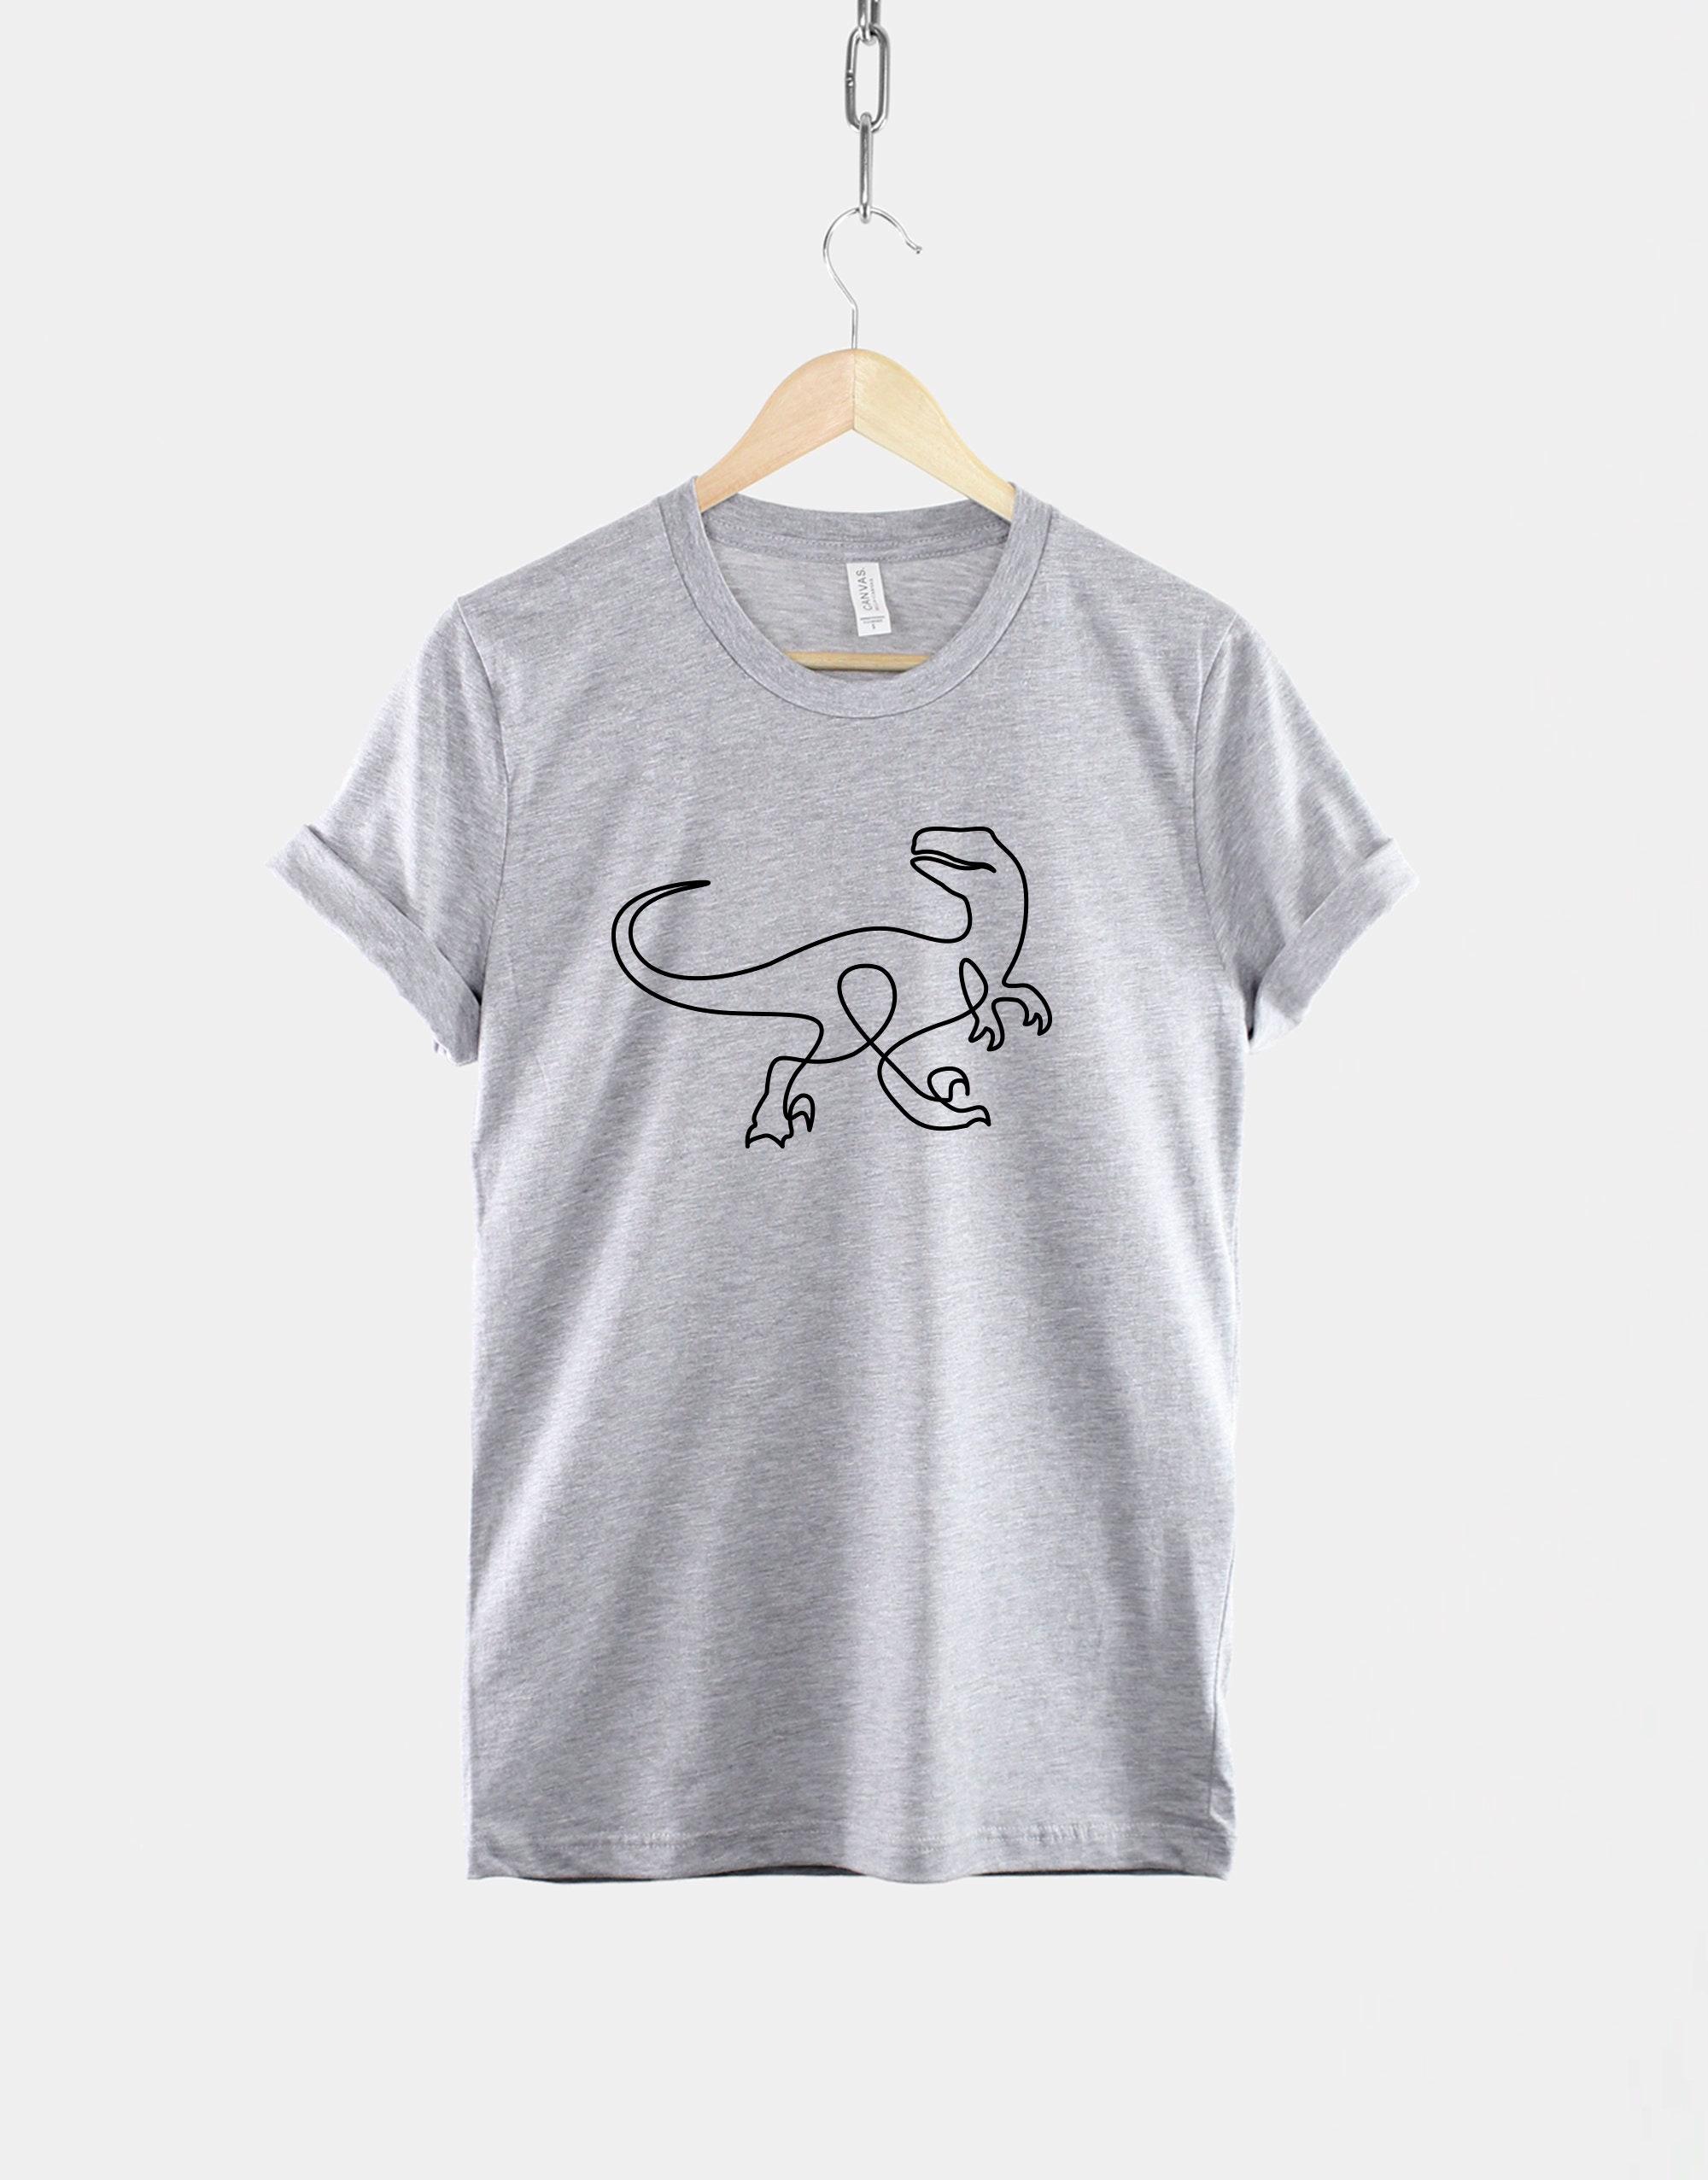 Discover Raptor T-Shirt - Dinosaur Shirt - Velociraptor TShirt - Dinosaur Shirt - Mens Minimal Dinosaur T-Shirt - Jurassic Dinosaur Print T-Shirt